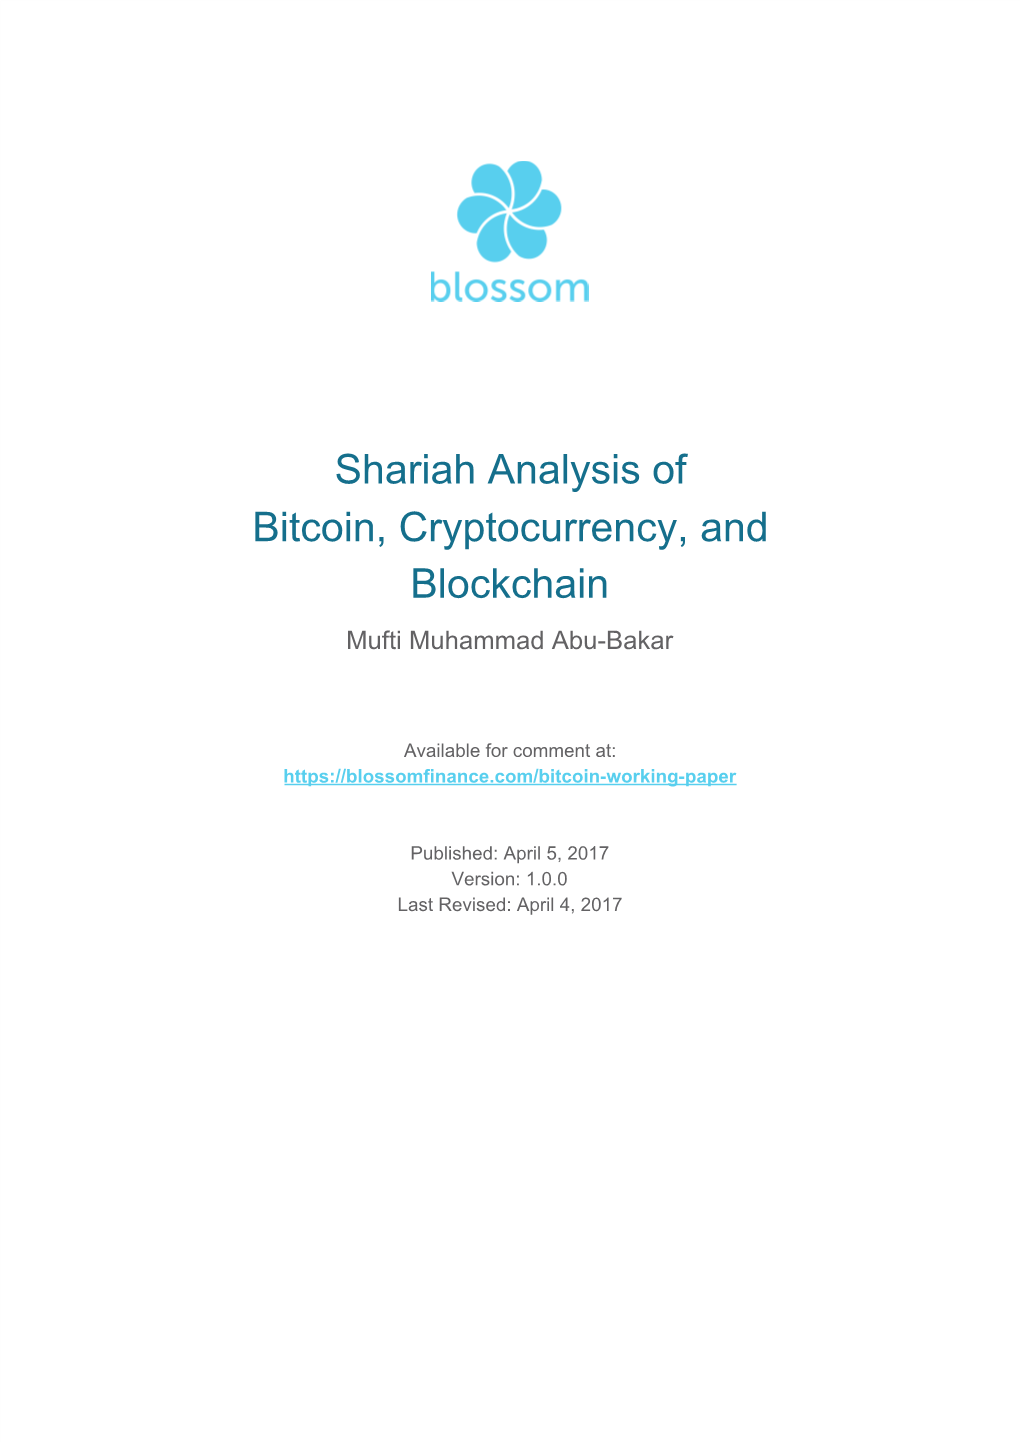 Shariah Analysis of Bitcoin, Cryptocurrency, and Blockchain Mufti Muhammad Abu-Bakar